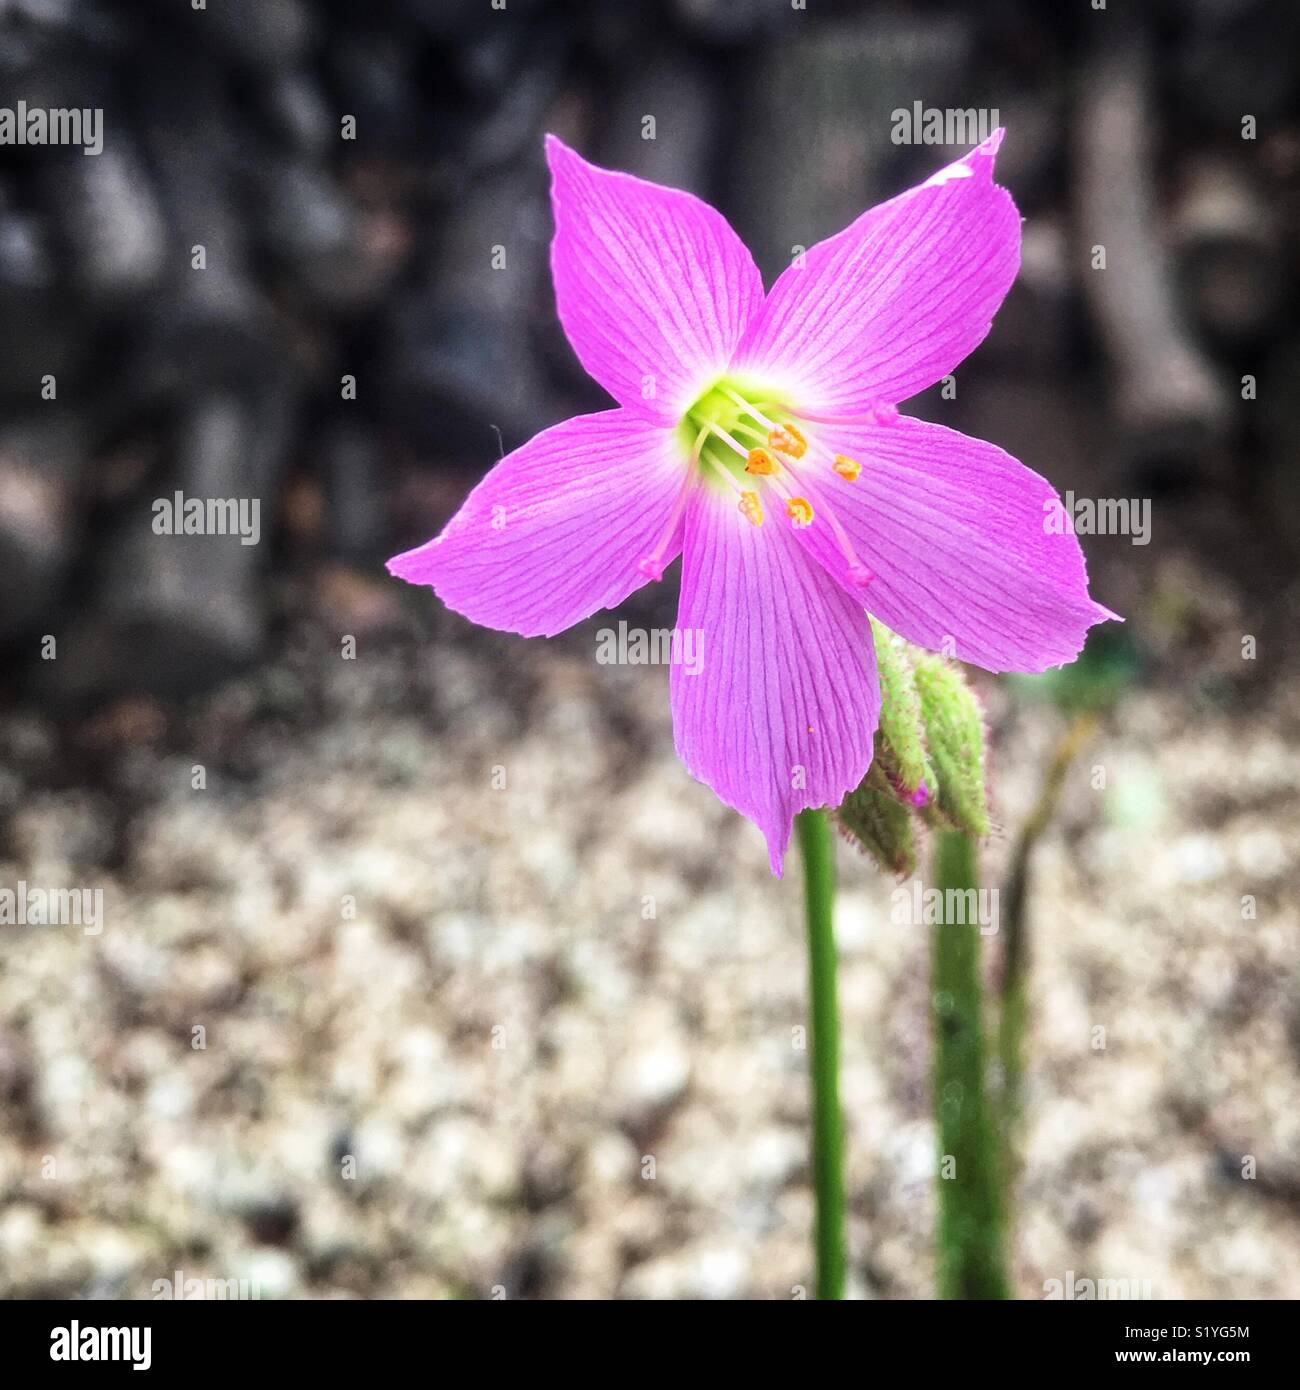 Drosera Regia - King Sundew flower Stock Photo